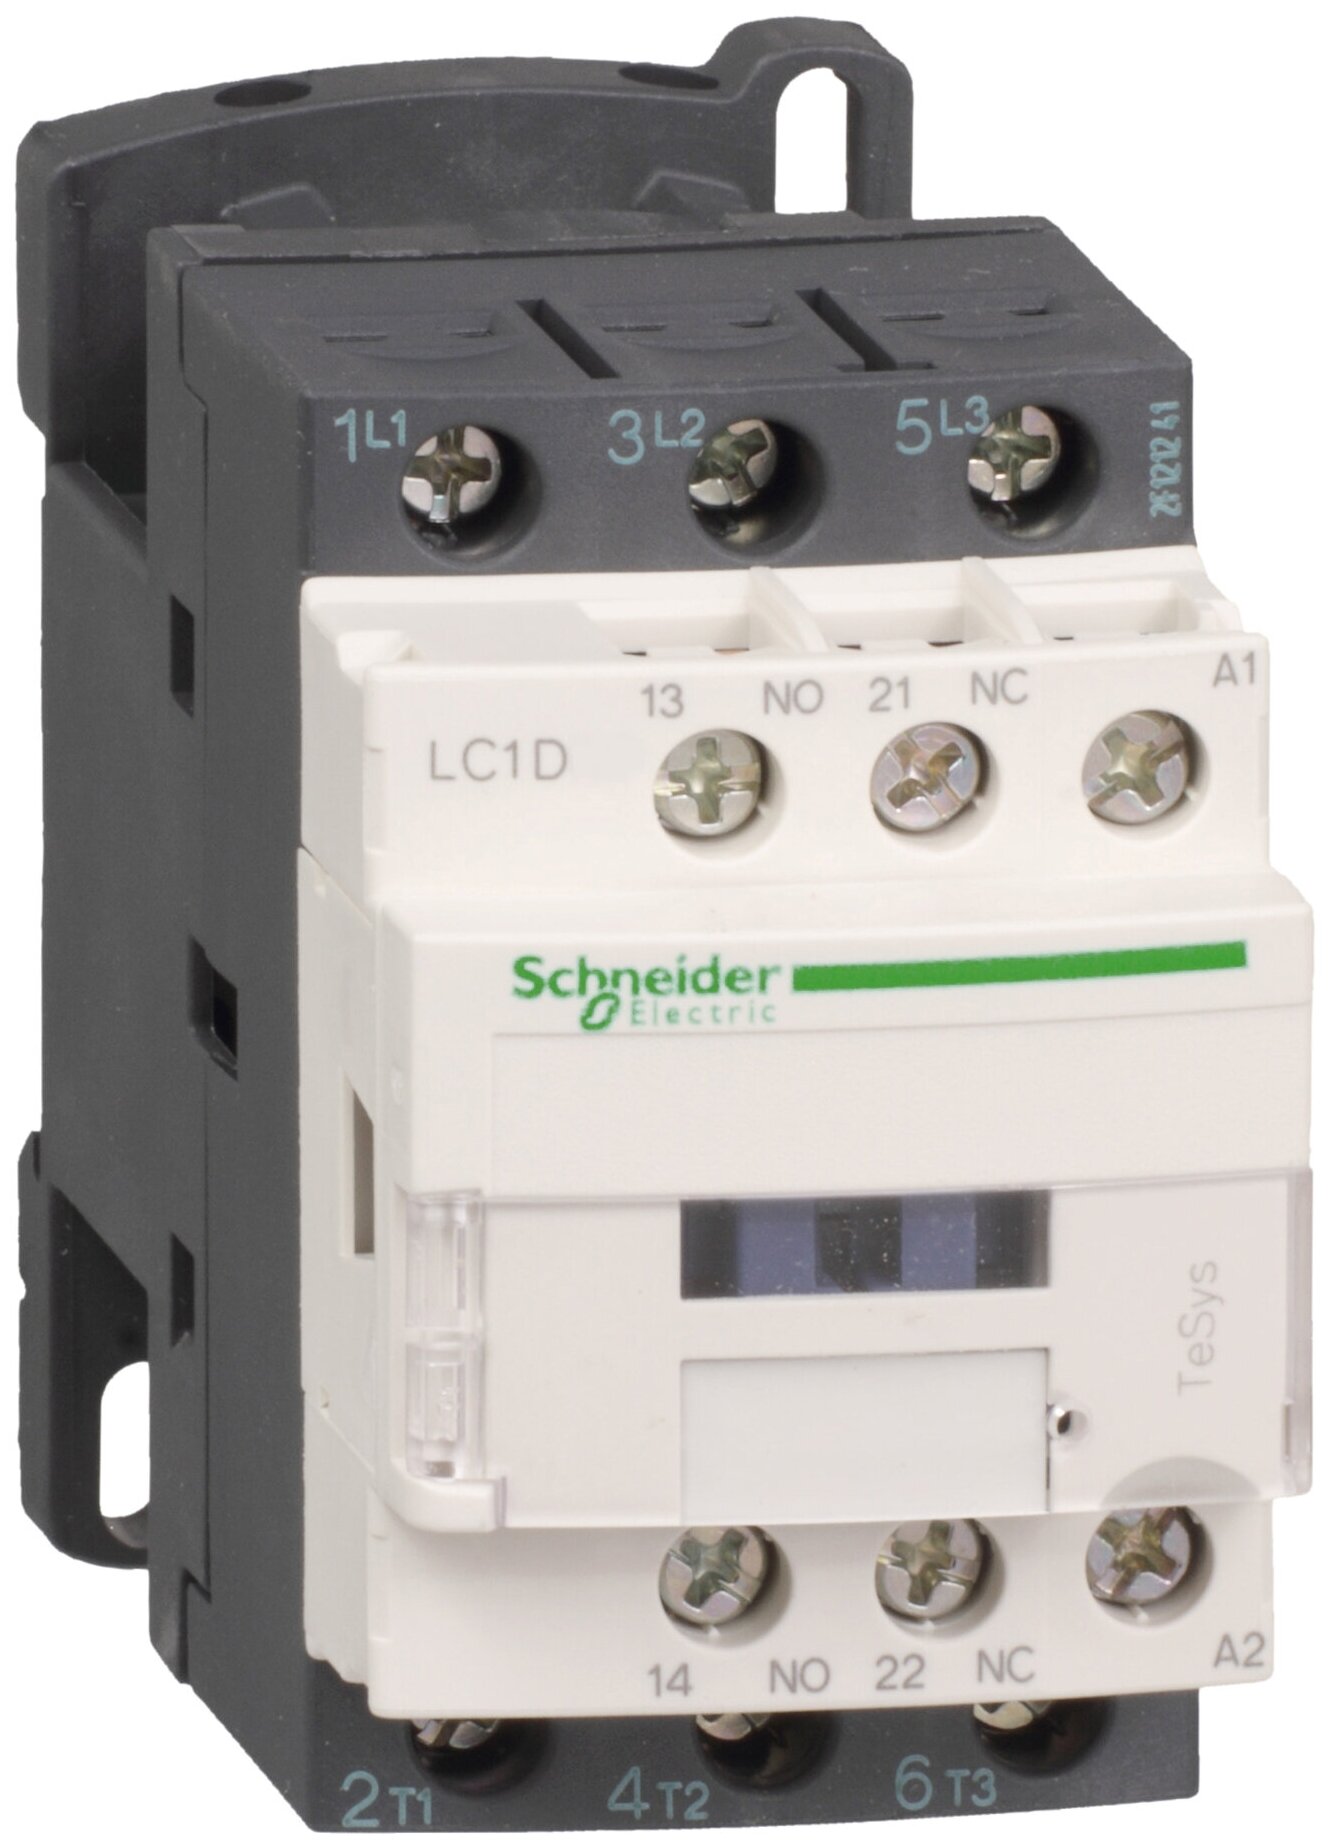  Schneider Electric LC1D09B7 24 9 1+1